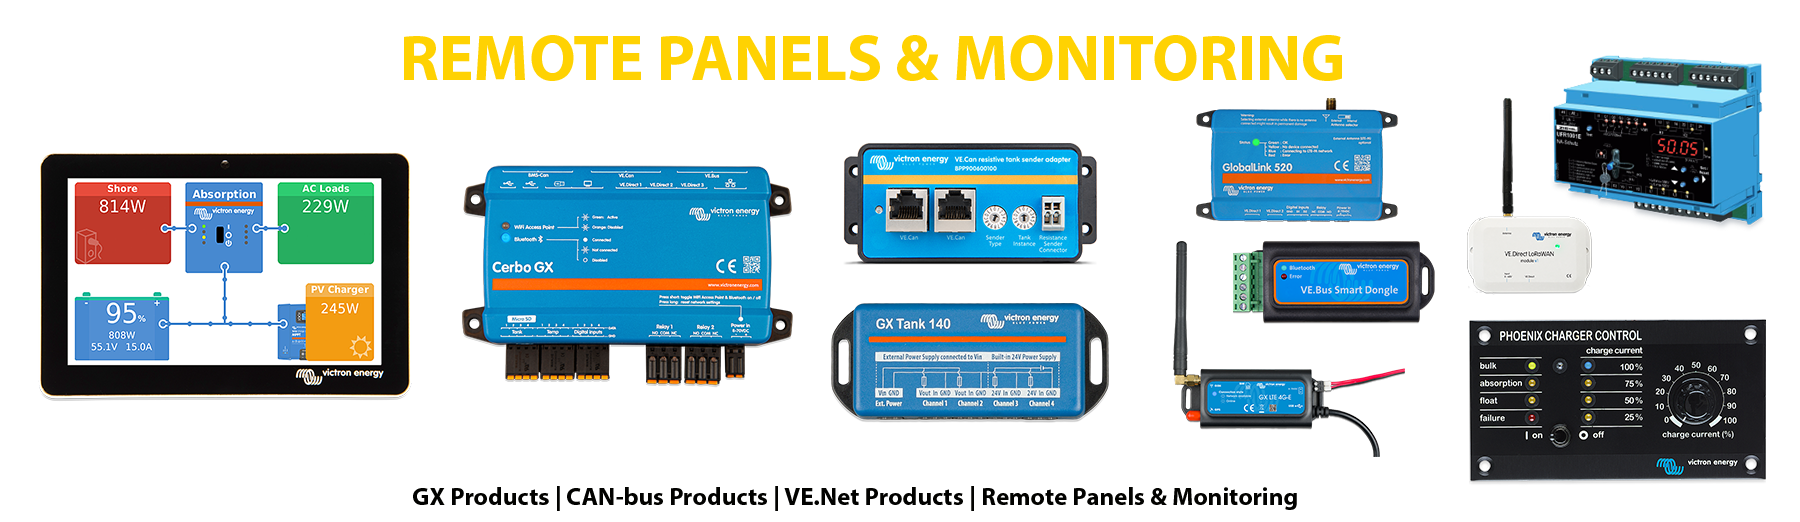 Remote panels & monitoring